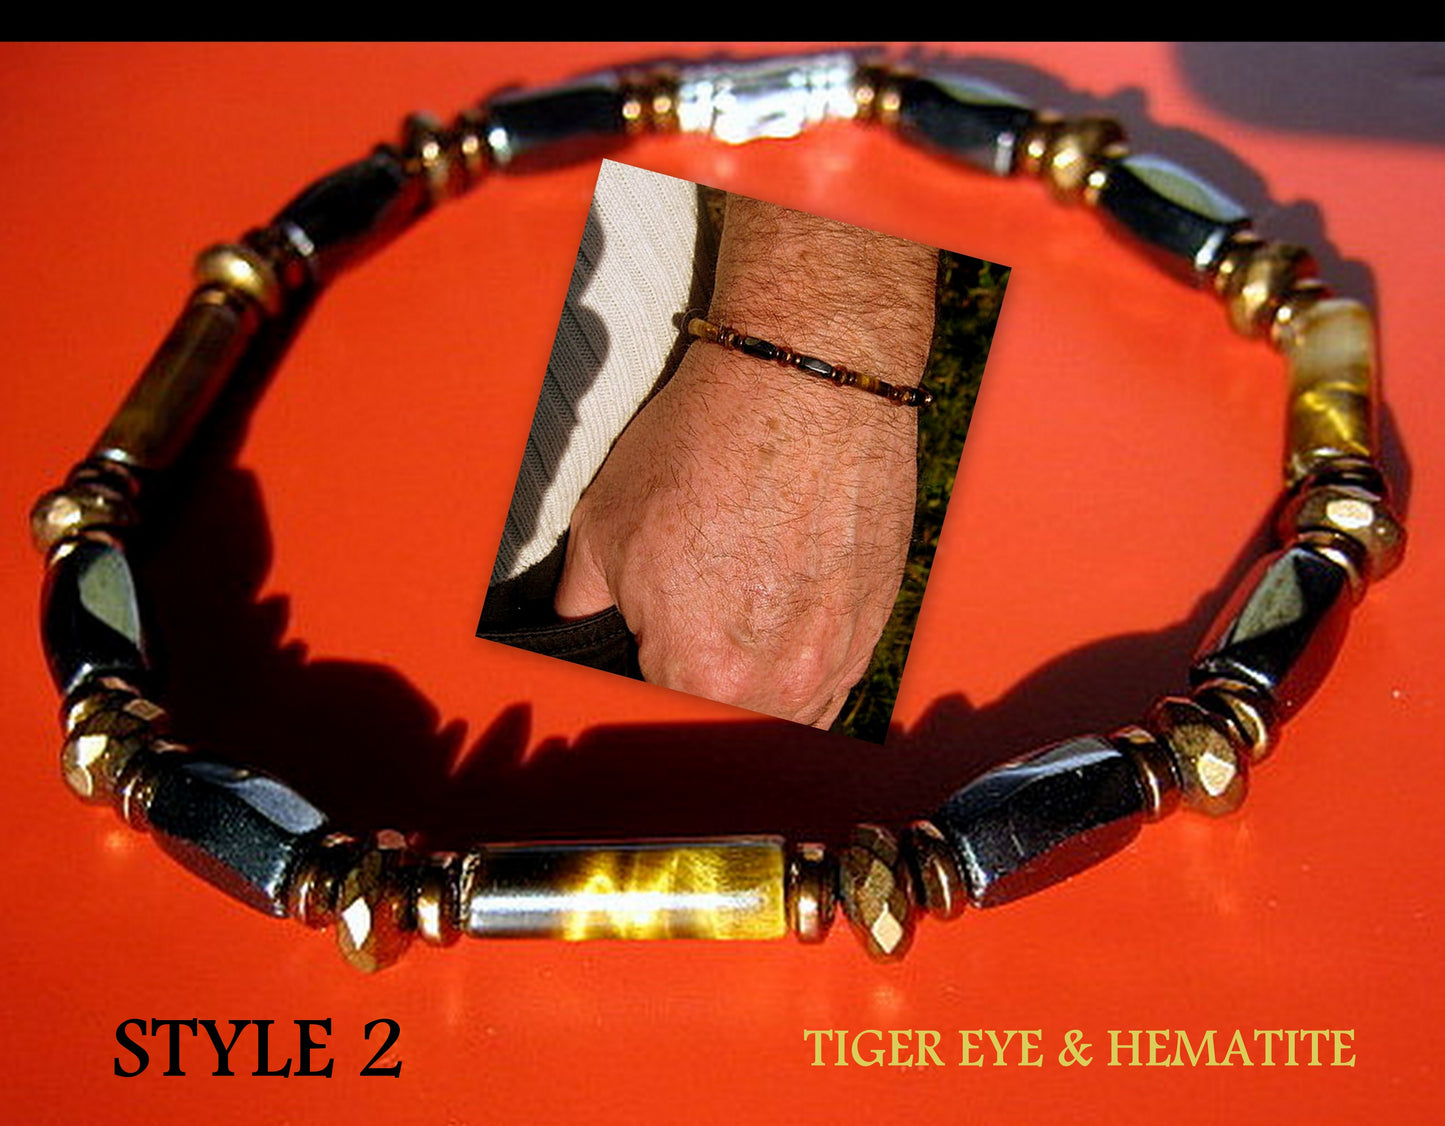 Men bracelet TIGER EYE Coco wood Hematite Healing protection stone, handmade bracelet Men gift